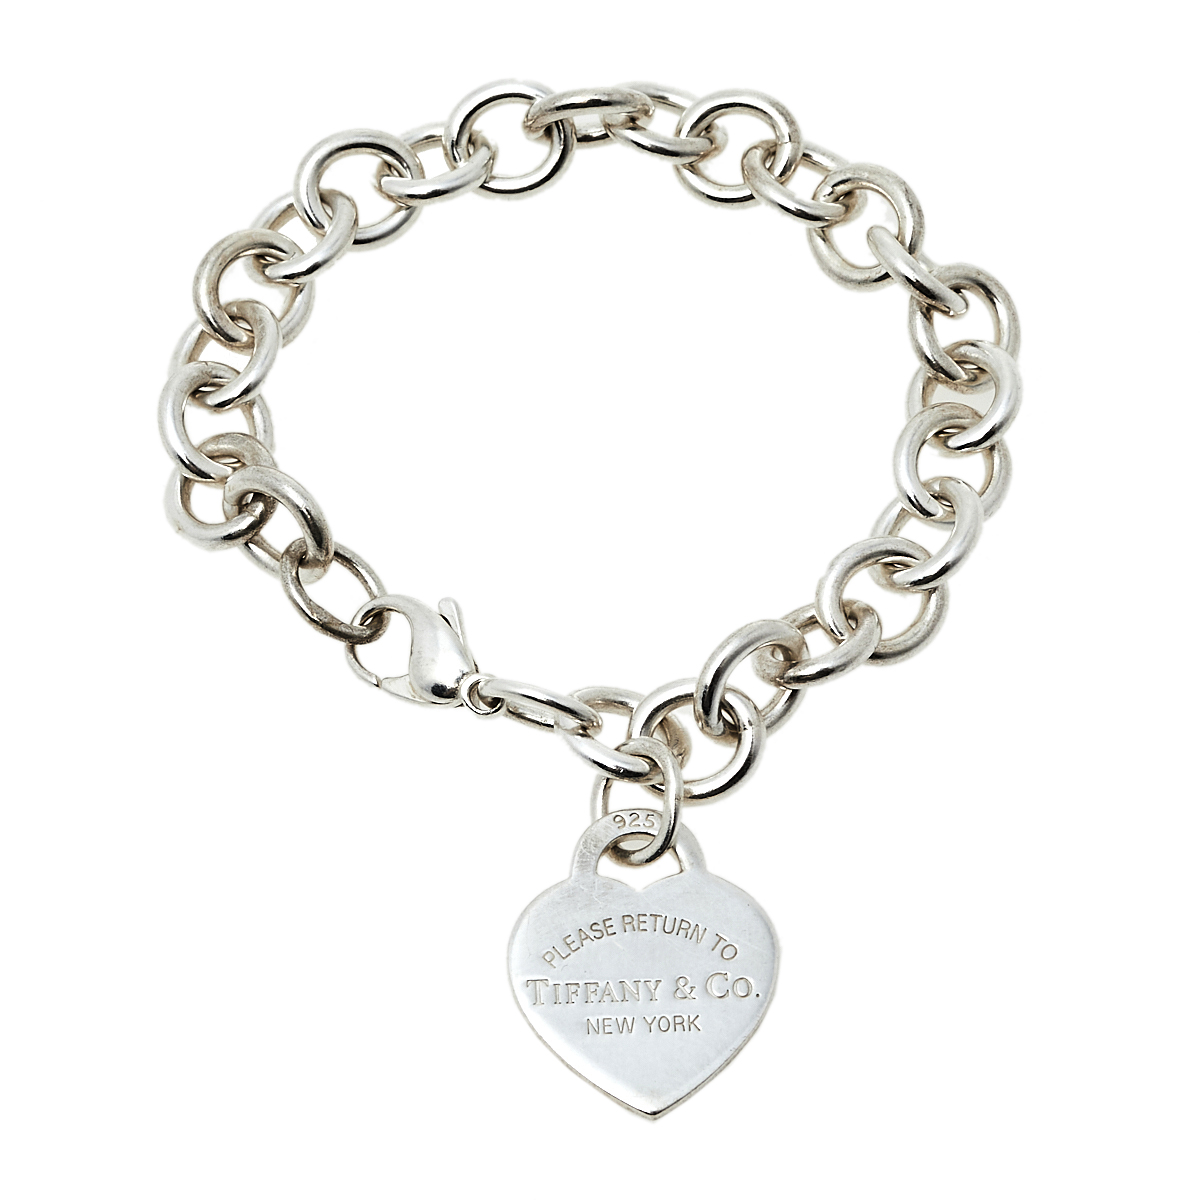 Tiffany & Co. Return to Tiffany Heart Tag Sterling Silver Charm Bracelet